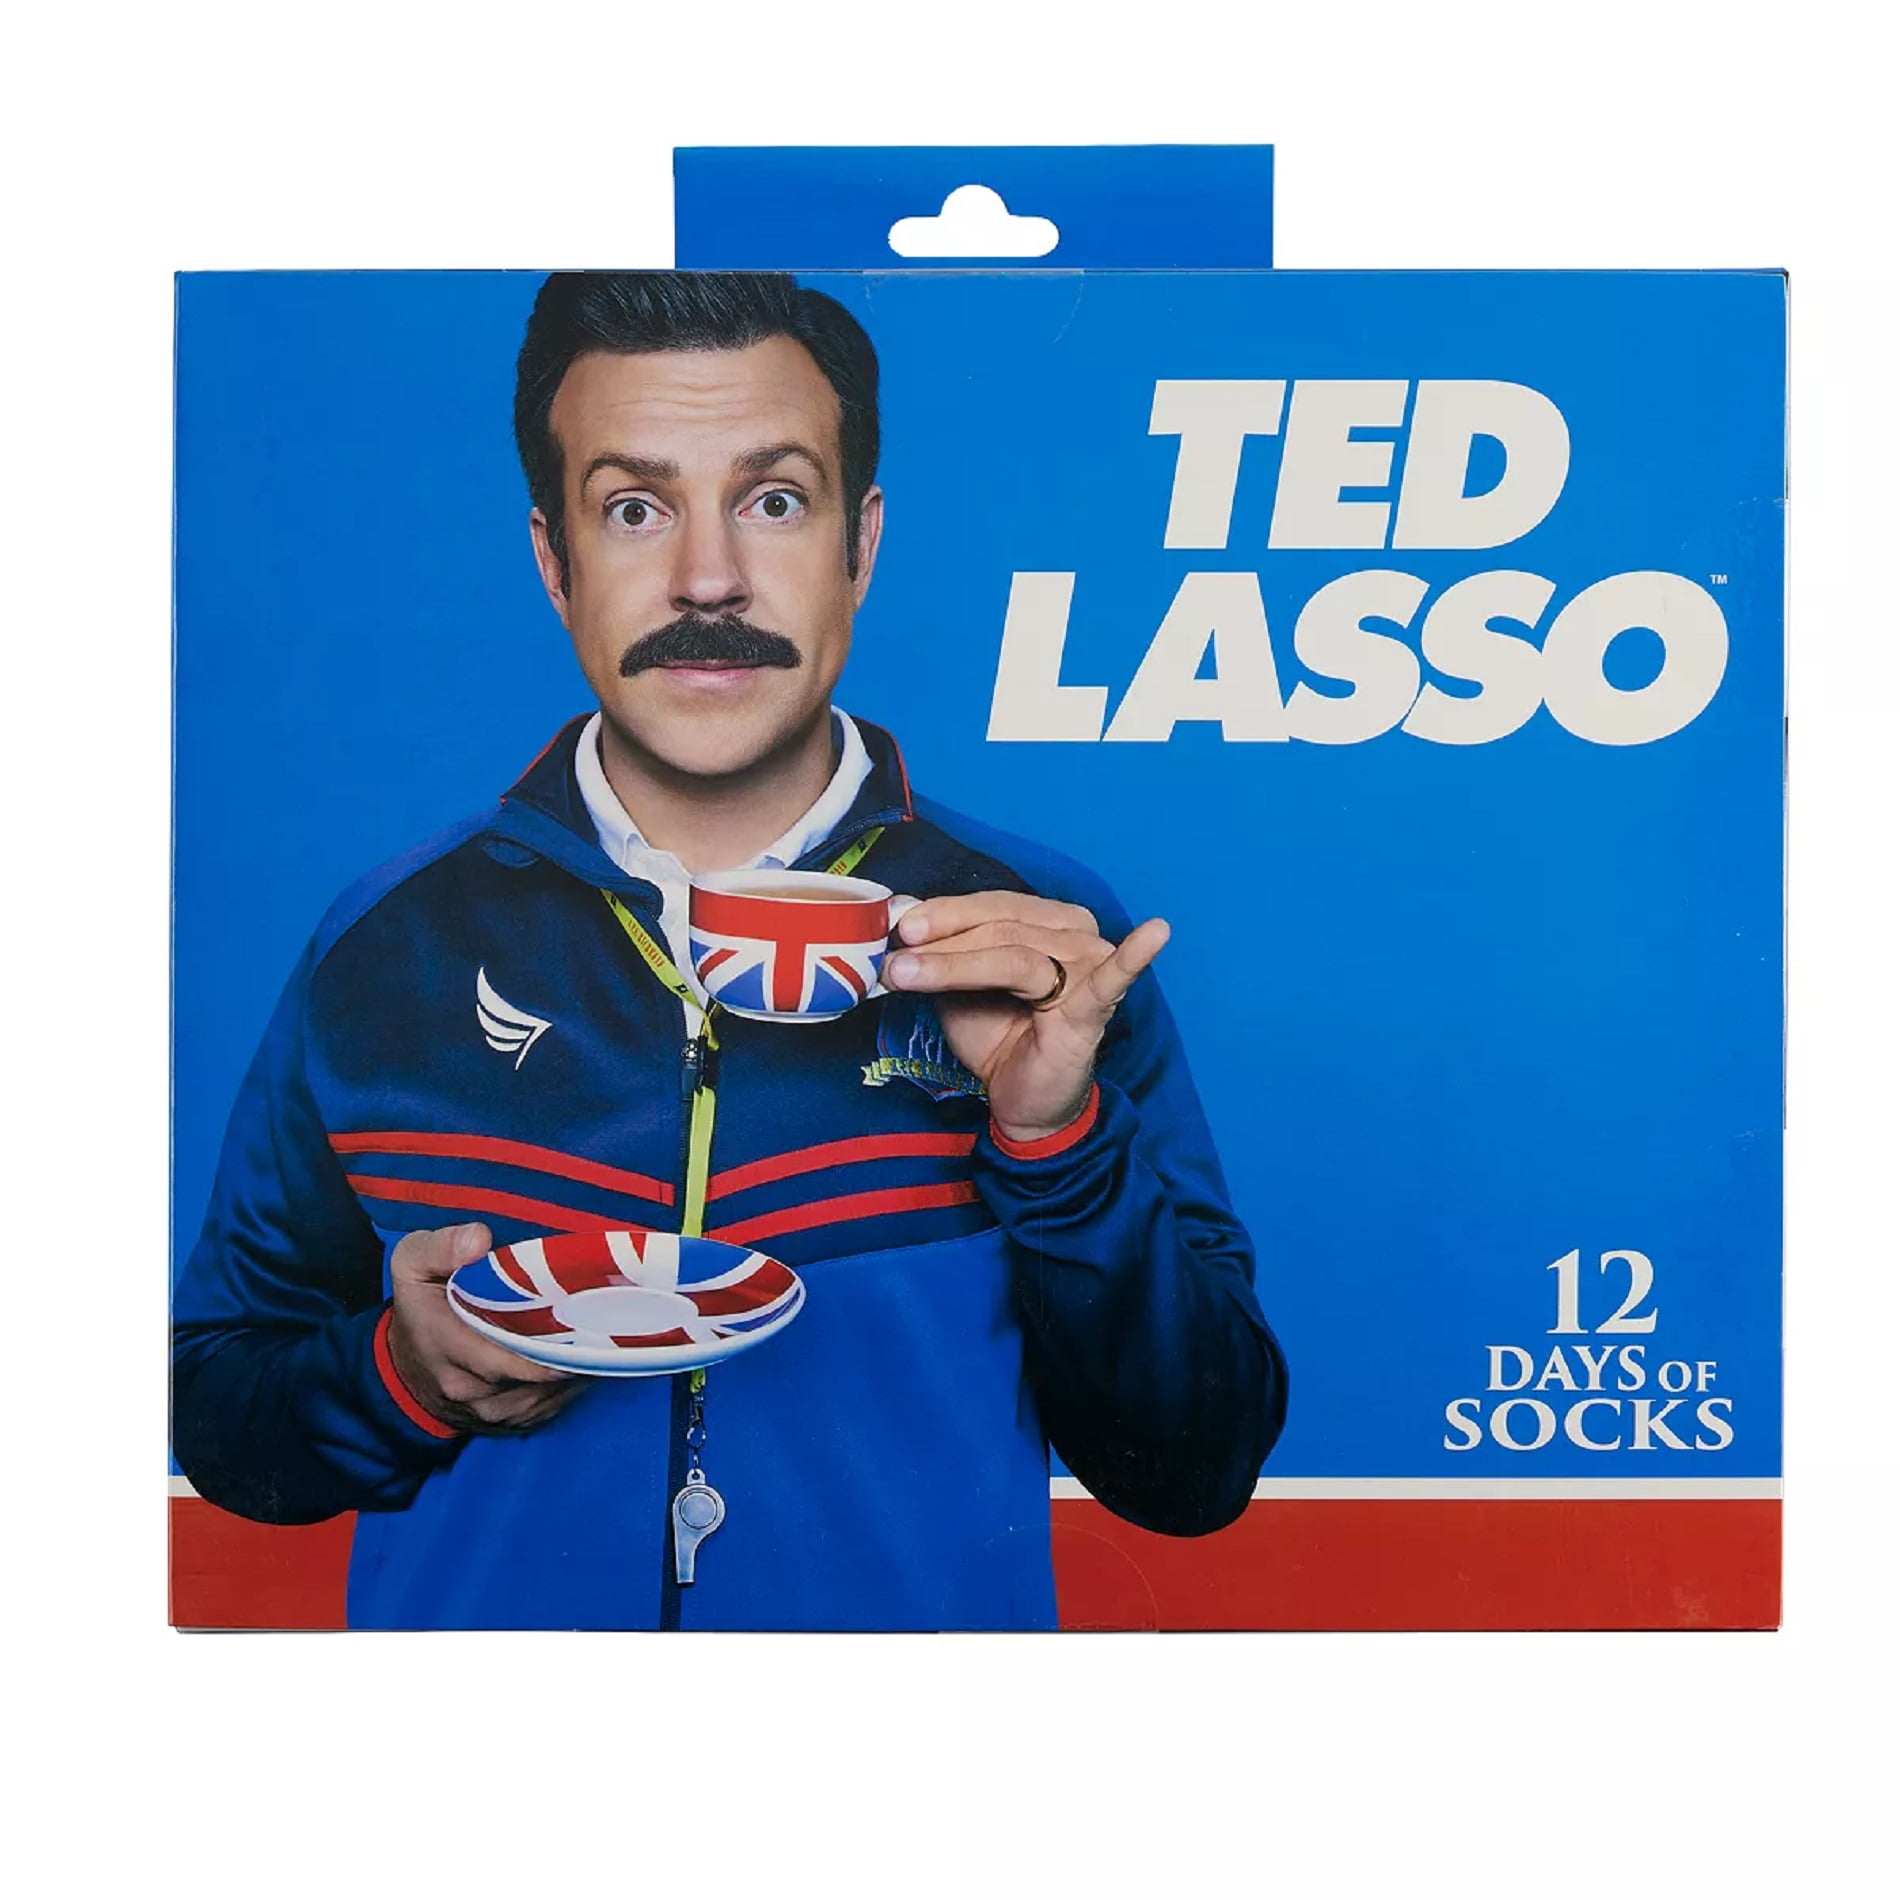 Mens 12 Days of Socks Ted Lasso Crew Socks - 6-12, 12 Pairs of socks